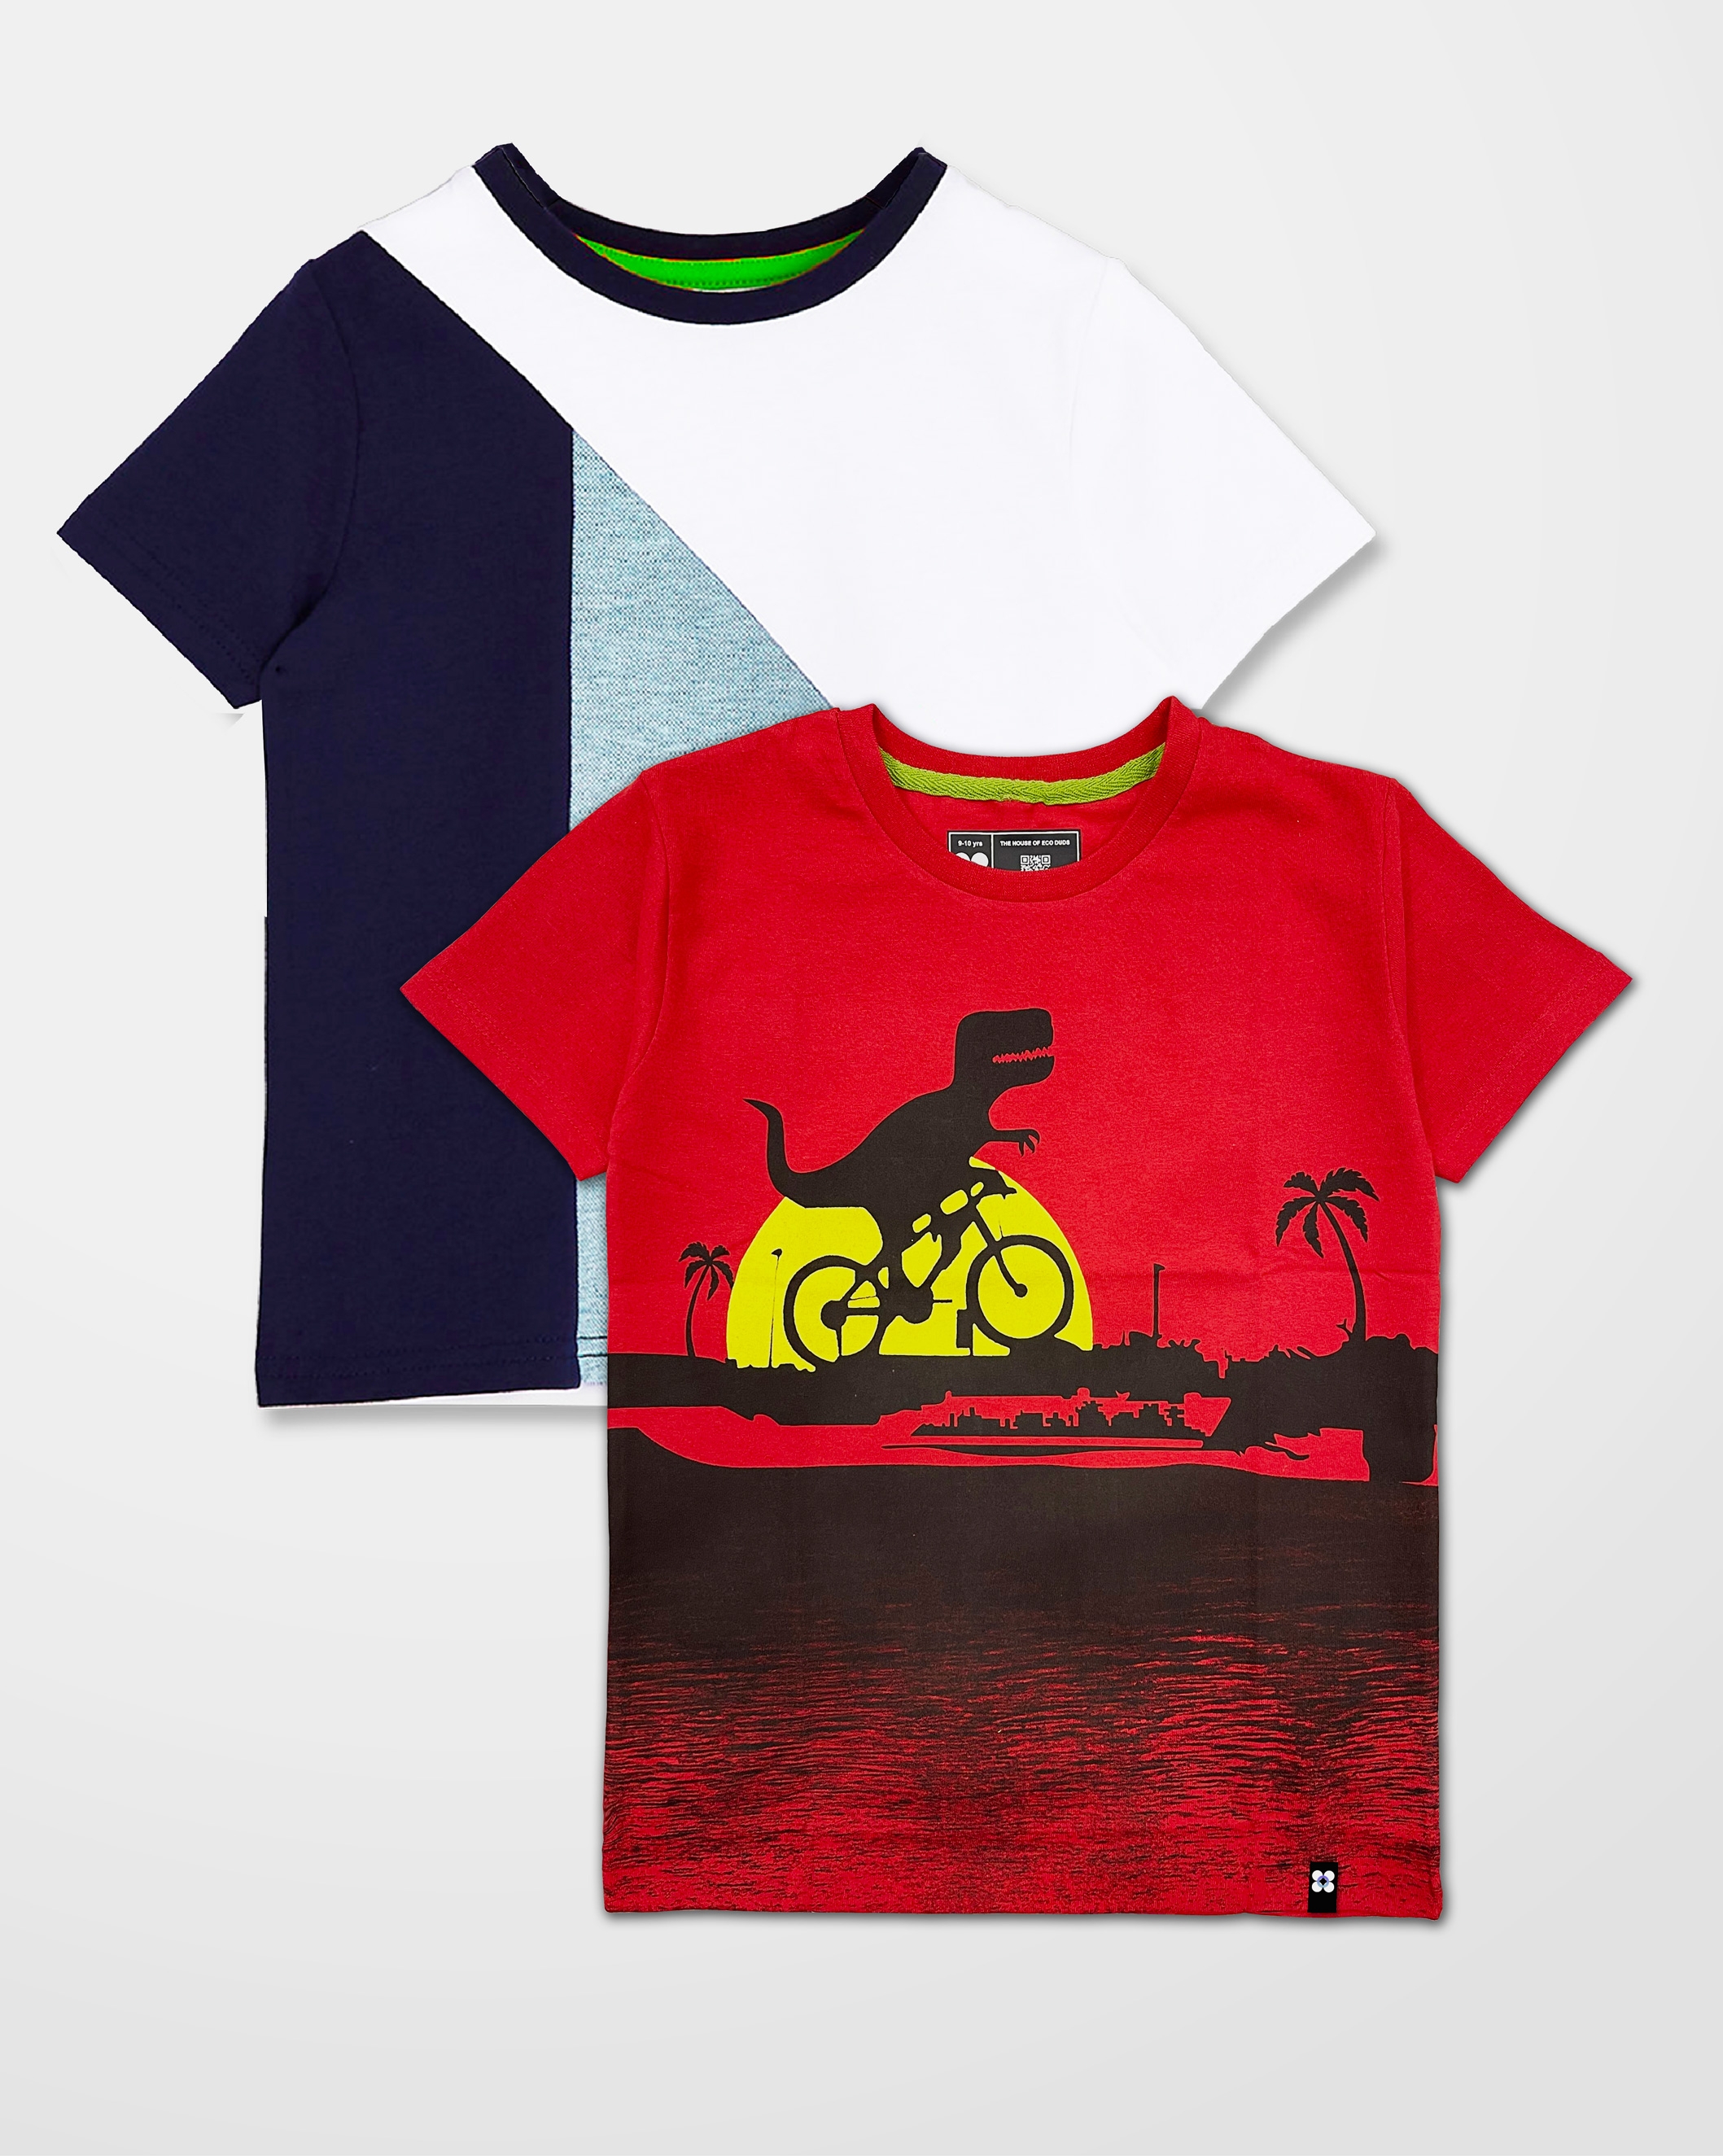 Vertu Duds | Vertu Duds Printed Unisex Kids Round Neck Multicoloured T-Shirt